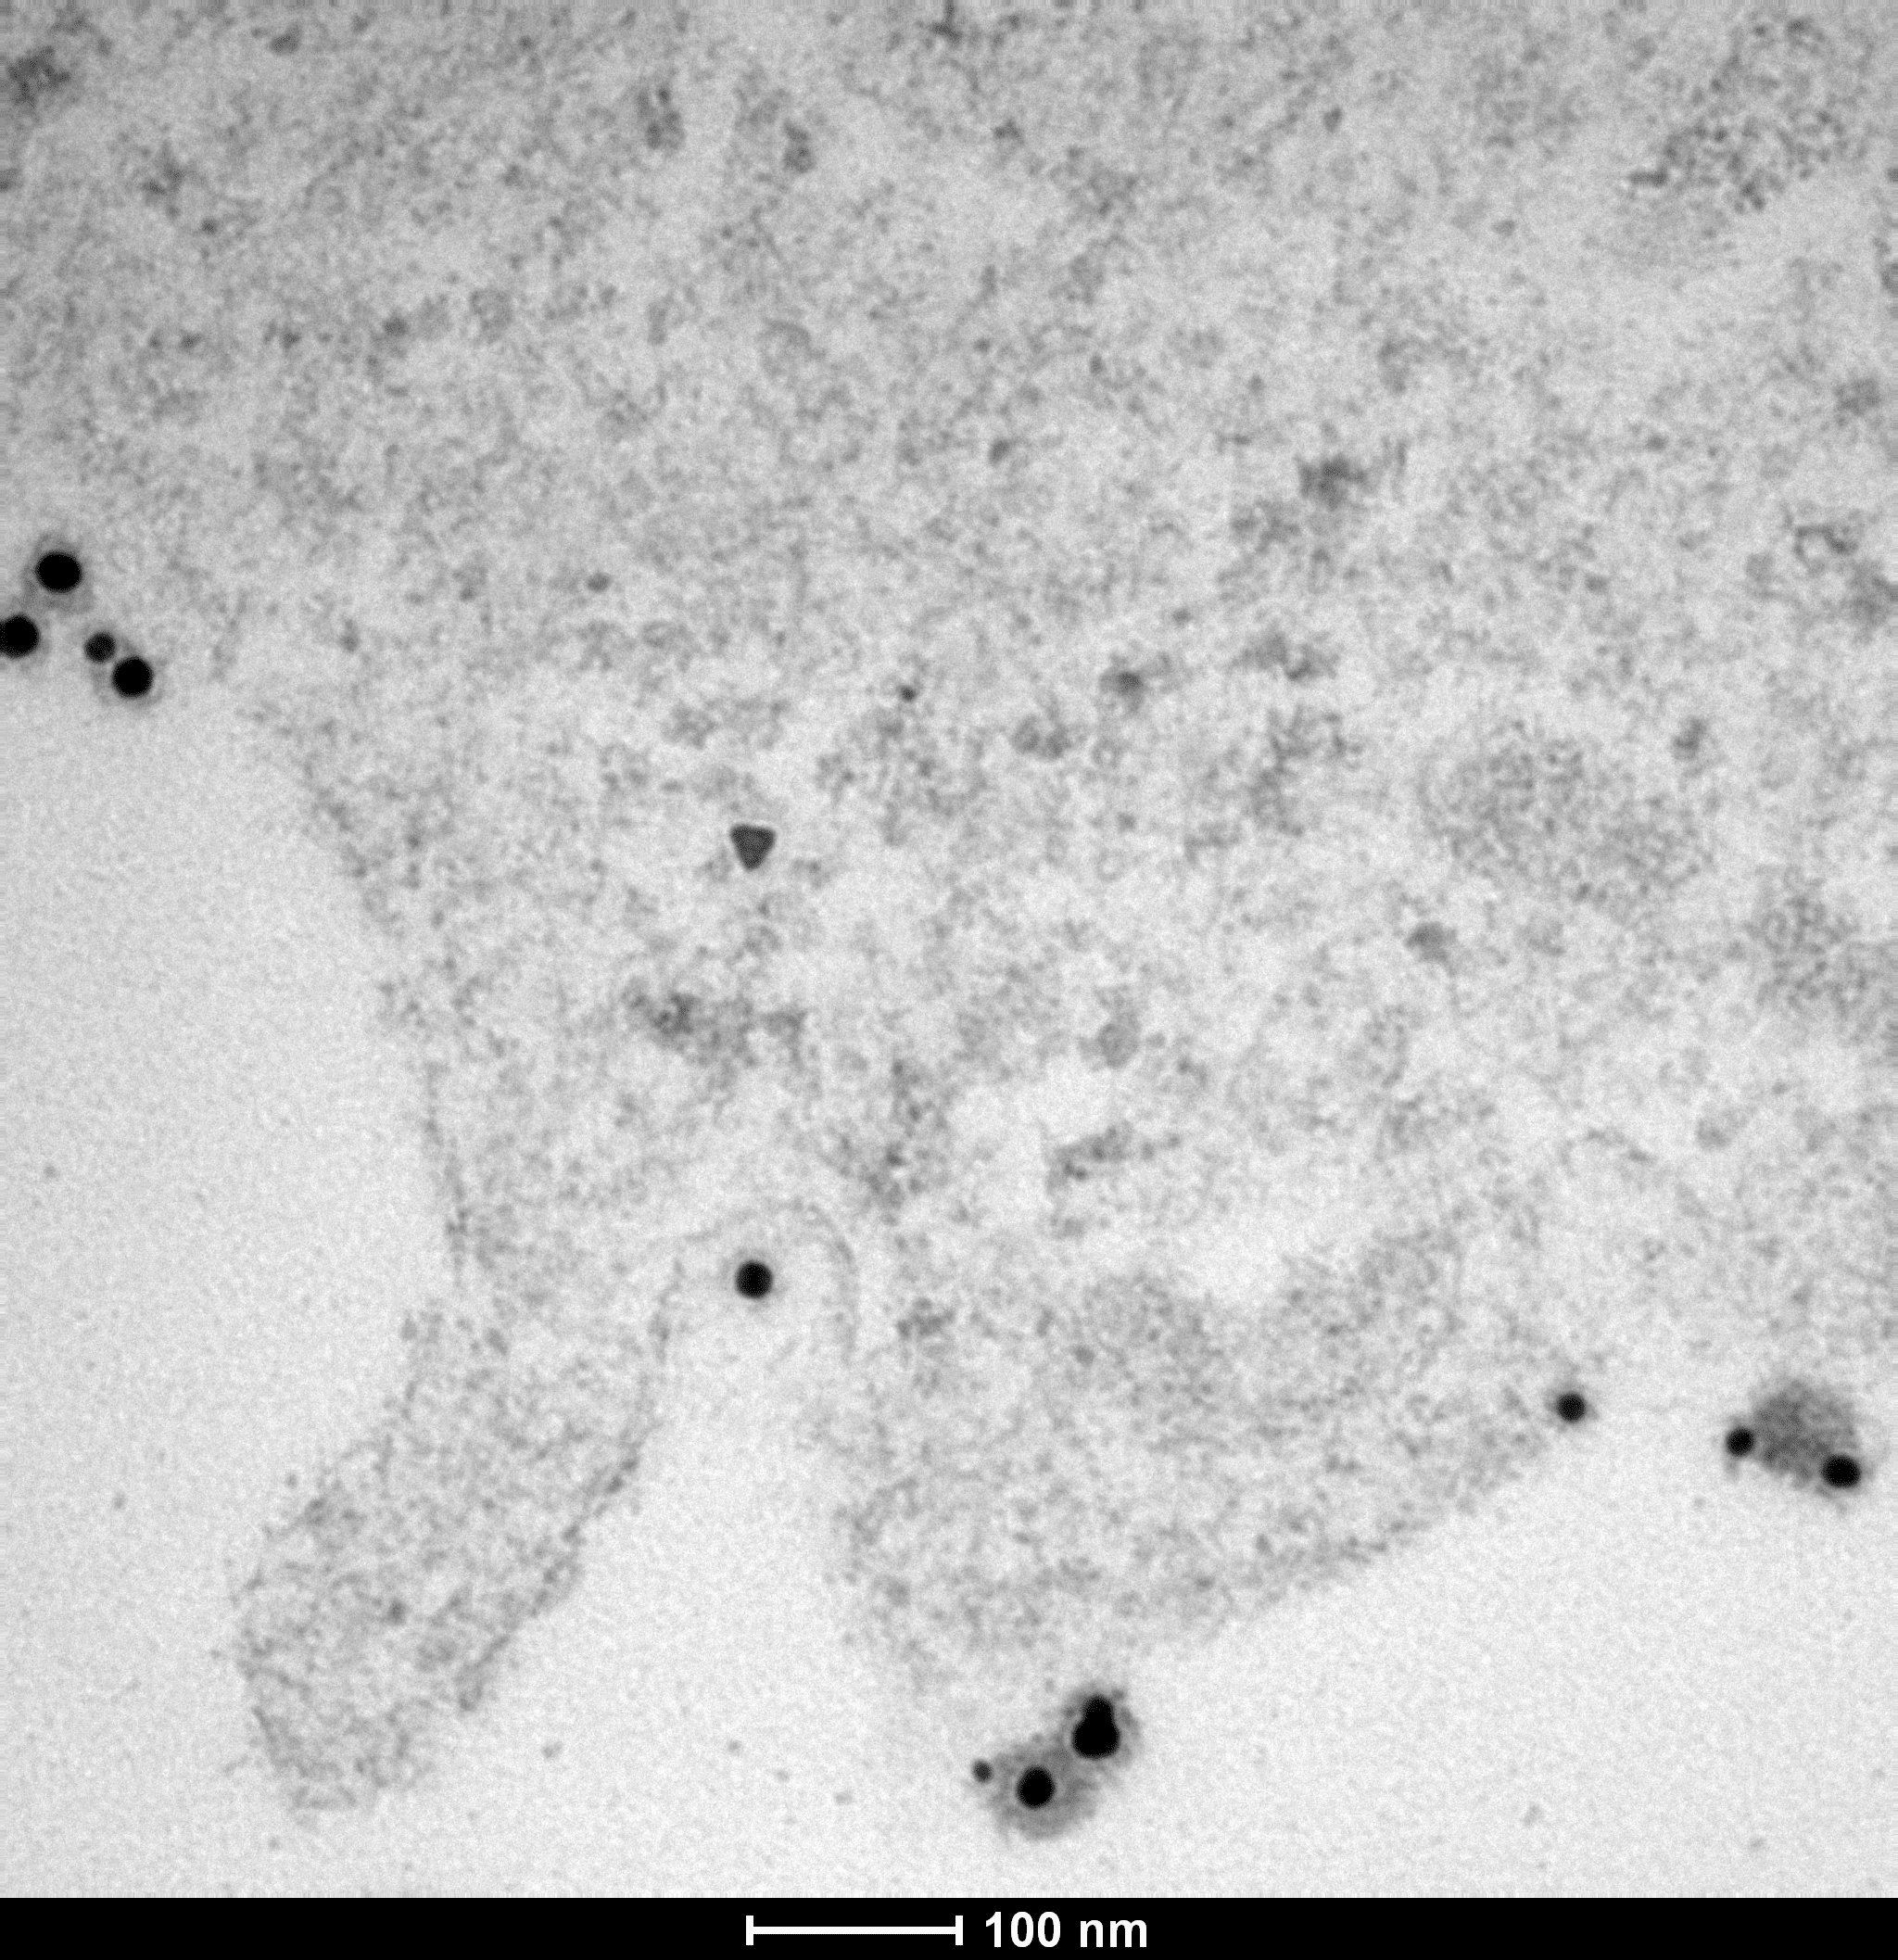 Gold nanoparticles entering a melanoma cell